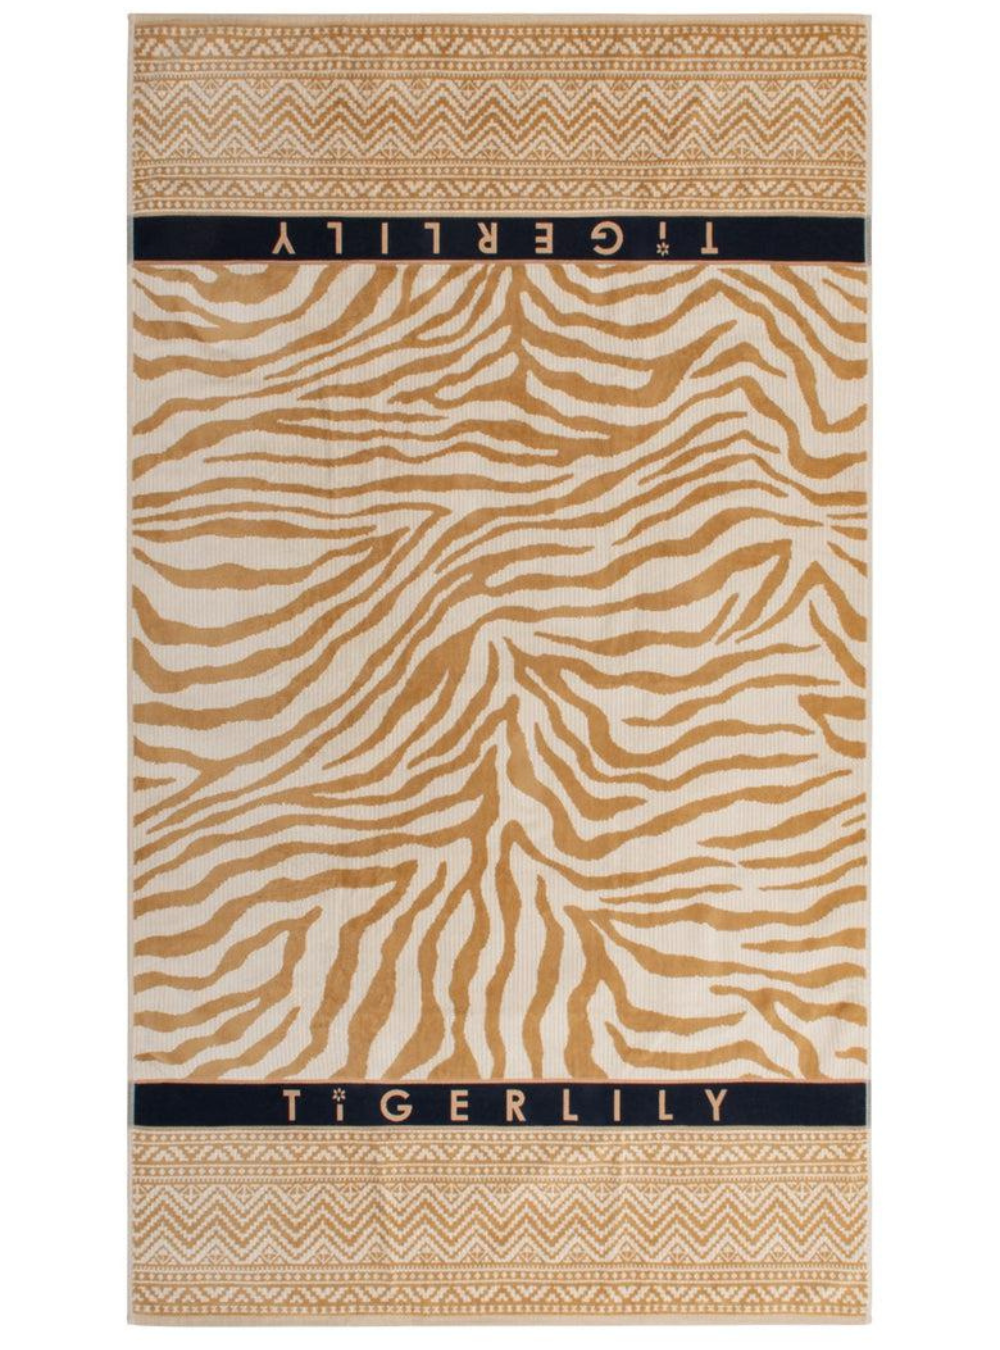 Tigerlily Nattier Towel - Tiger